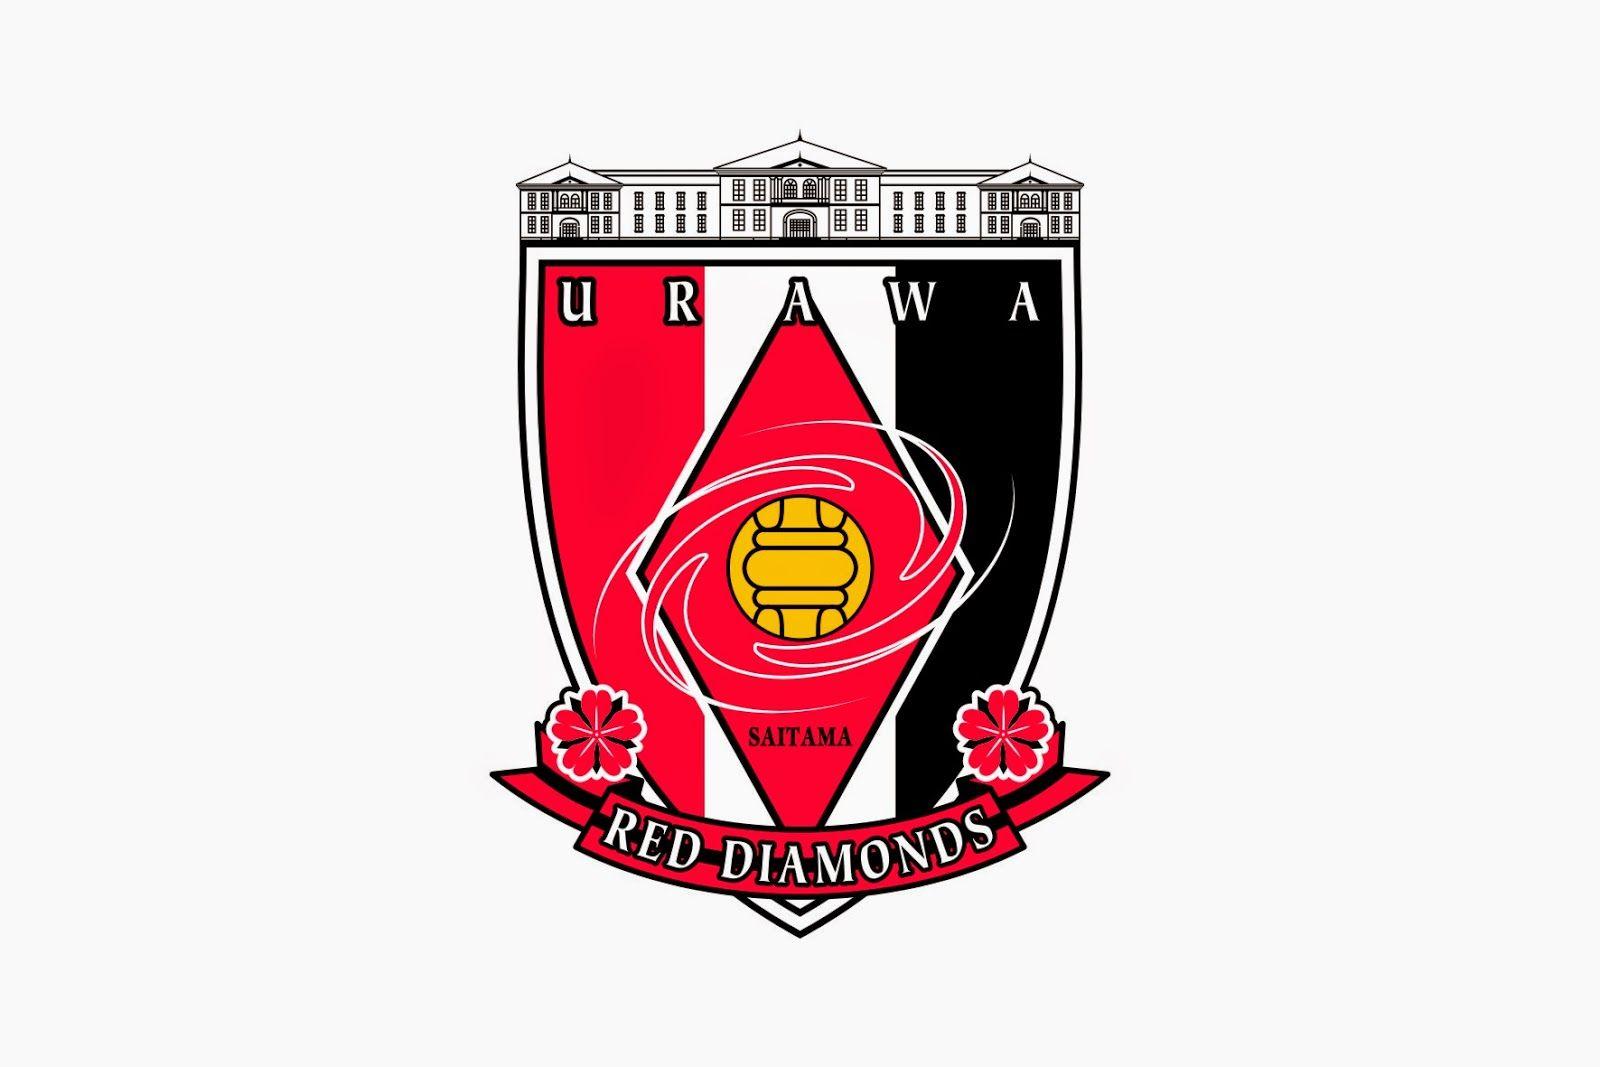 Red Diamond -Shaped Logo - Urawa Red Diamonds Logo